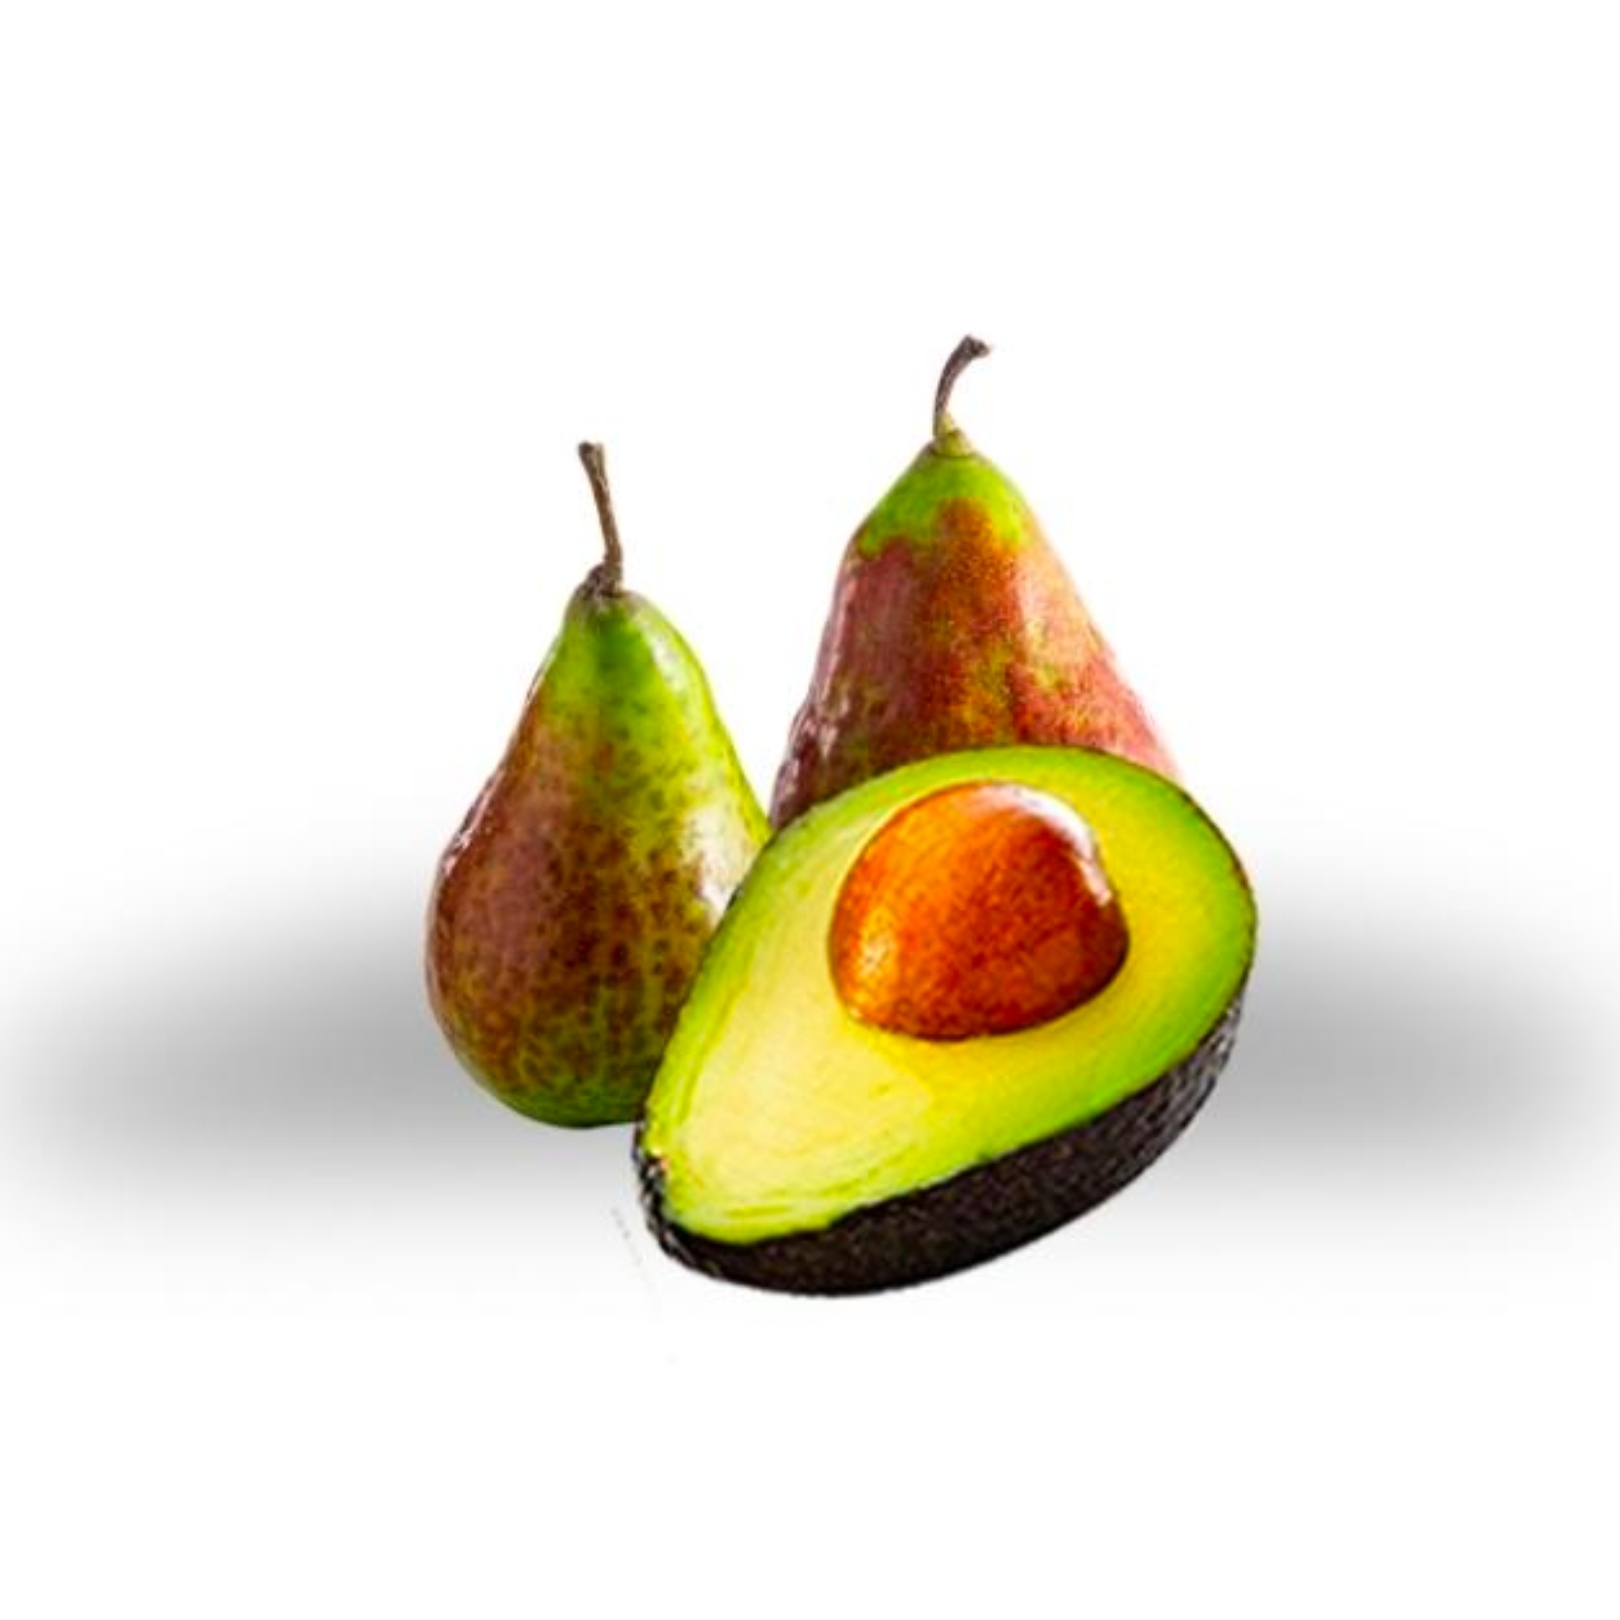 Buy Pear Avocado Online NZ - Twisted Citrus